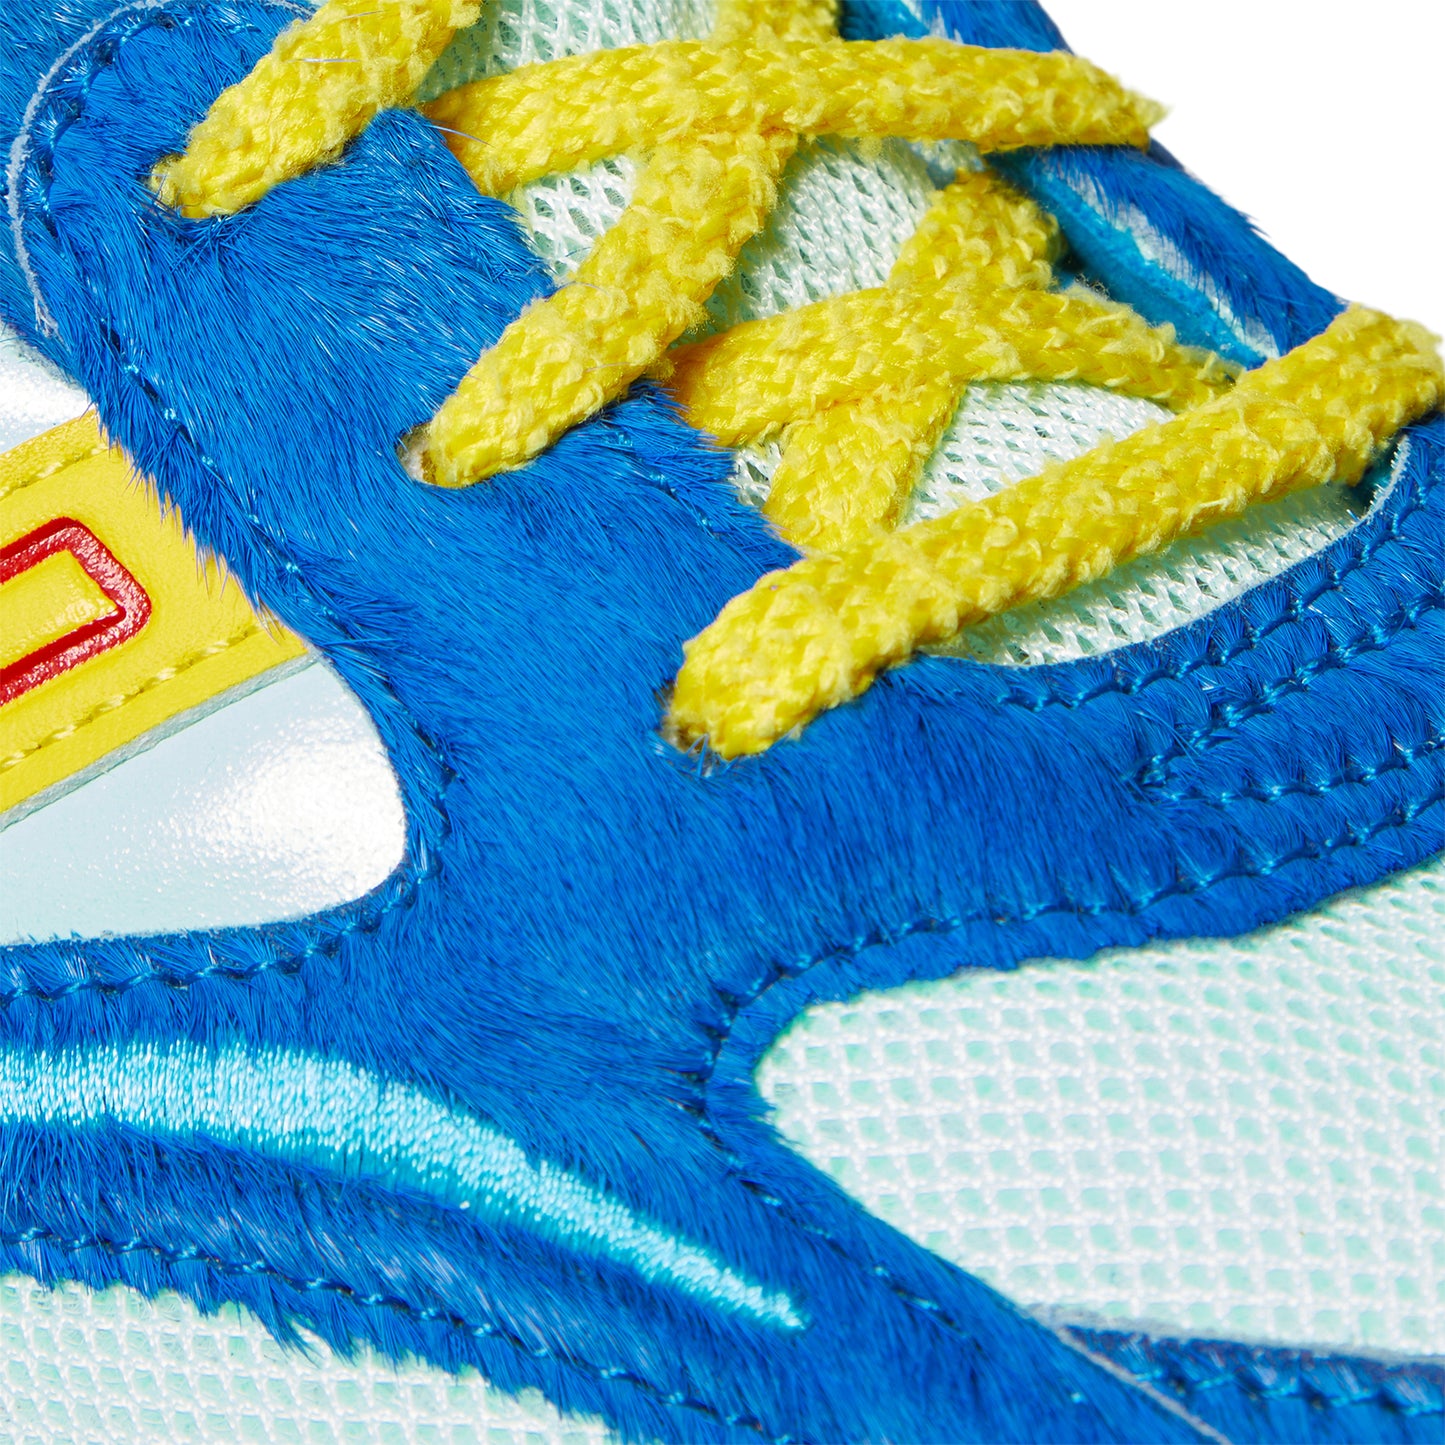 adidas x Kerwin Frost Microbounce (Yellow/Scarlet/Blue)